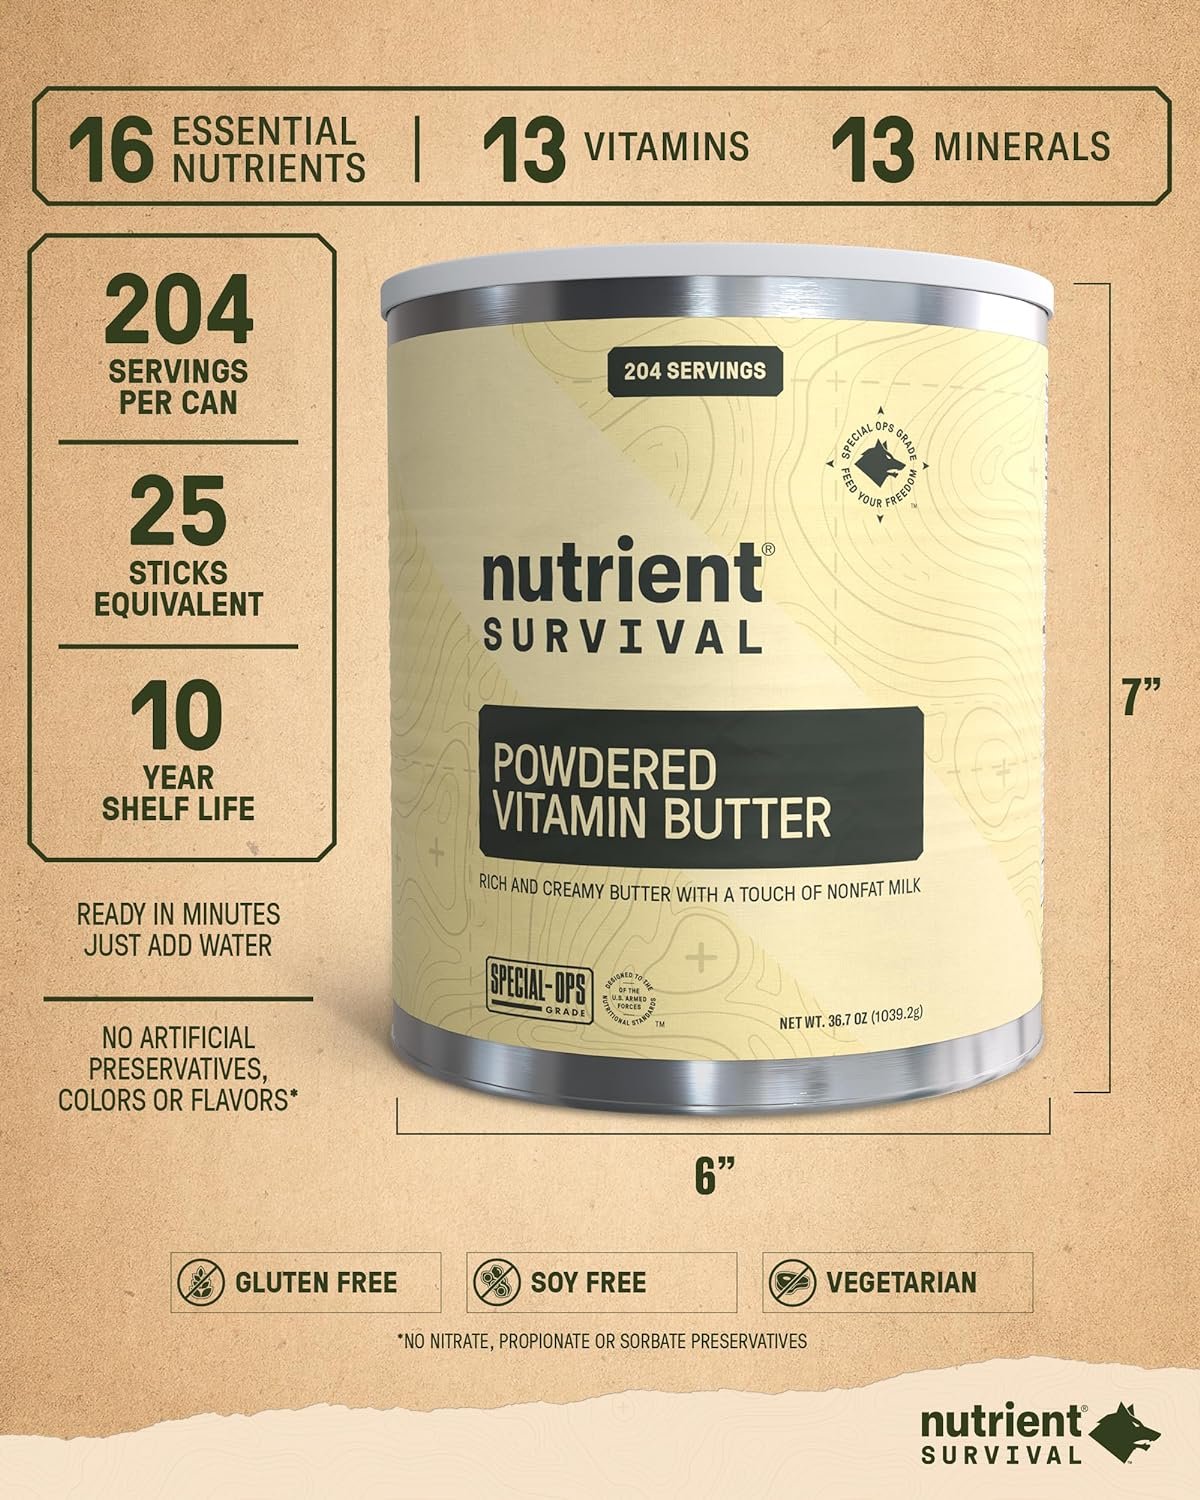 Nutrient Survival Vitamin Butter Powder Review